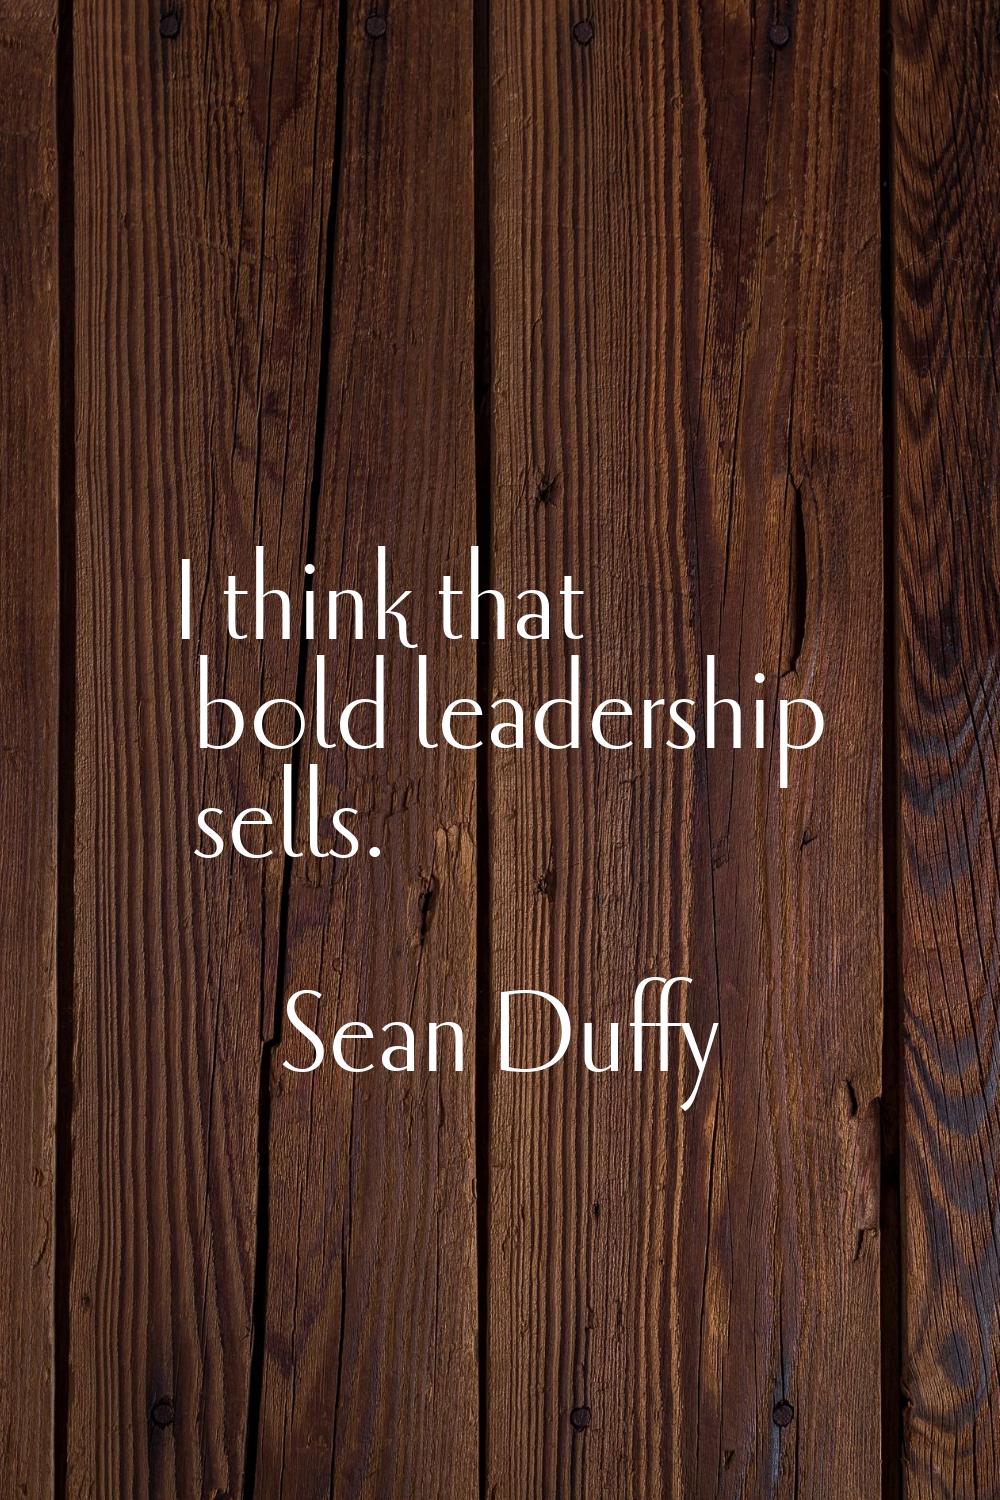 I think that bold leadership sells.